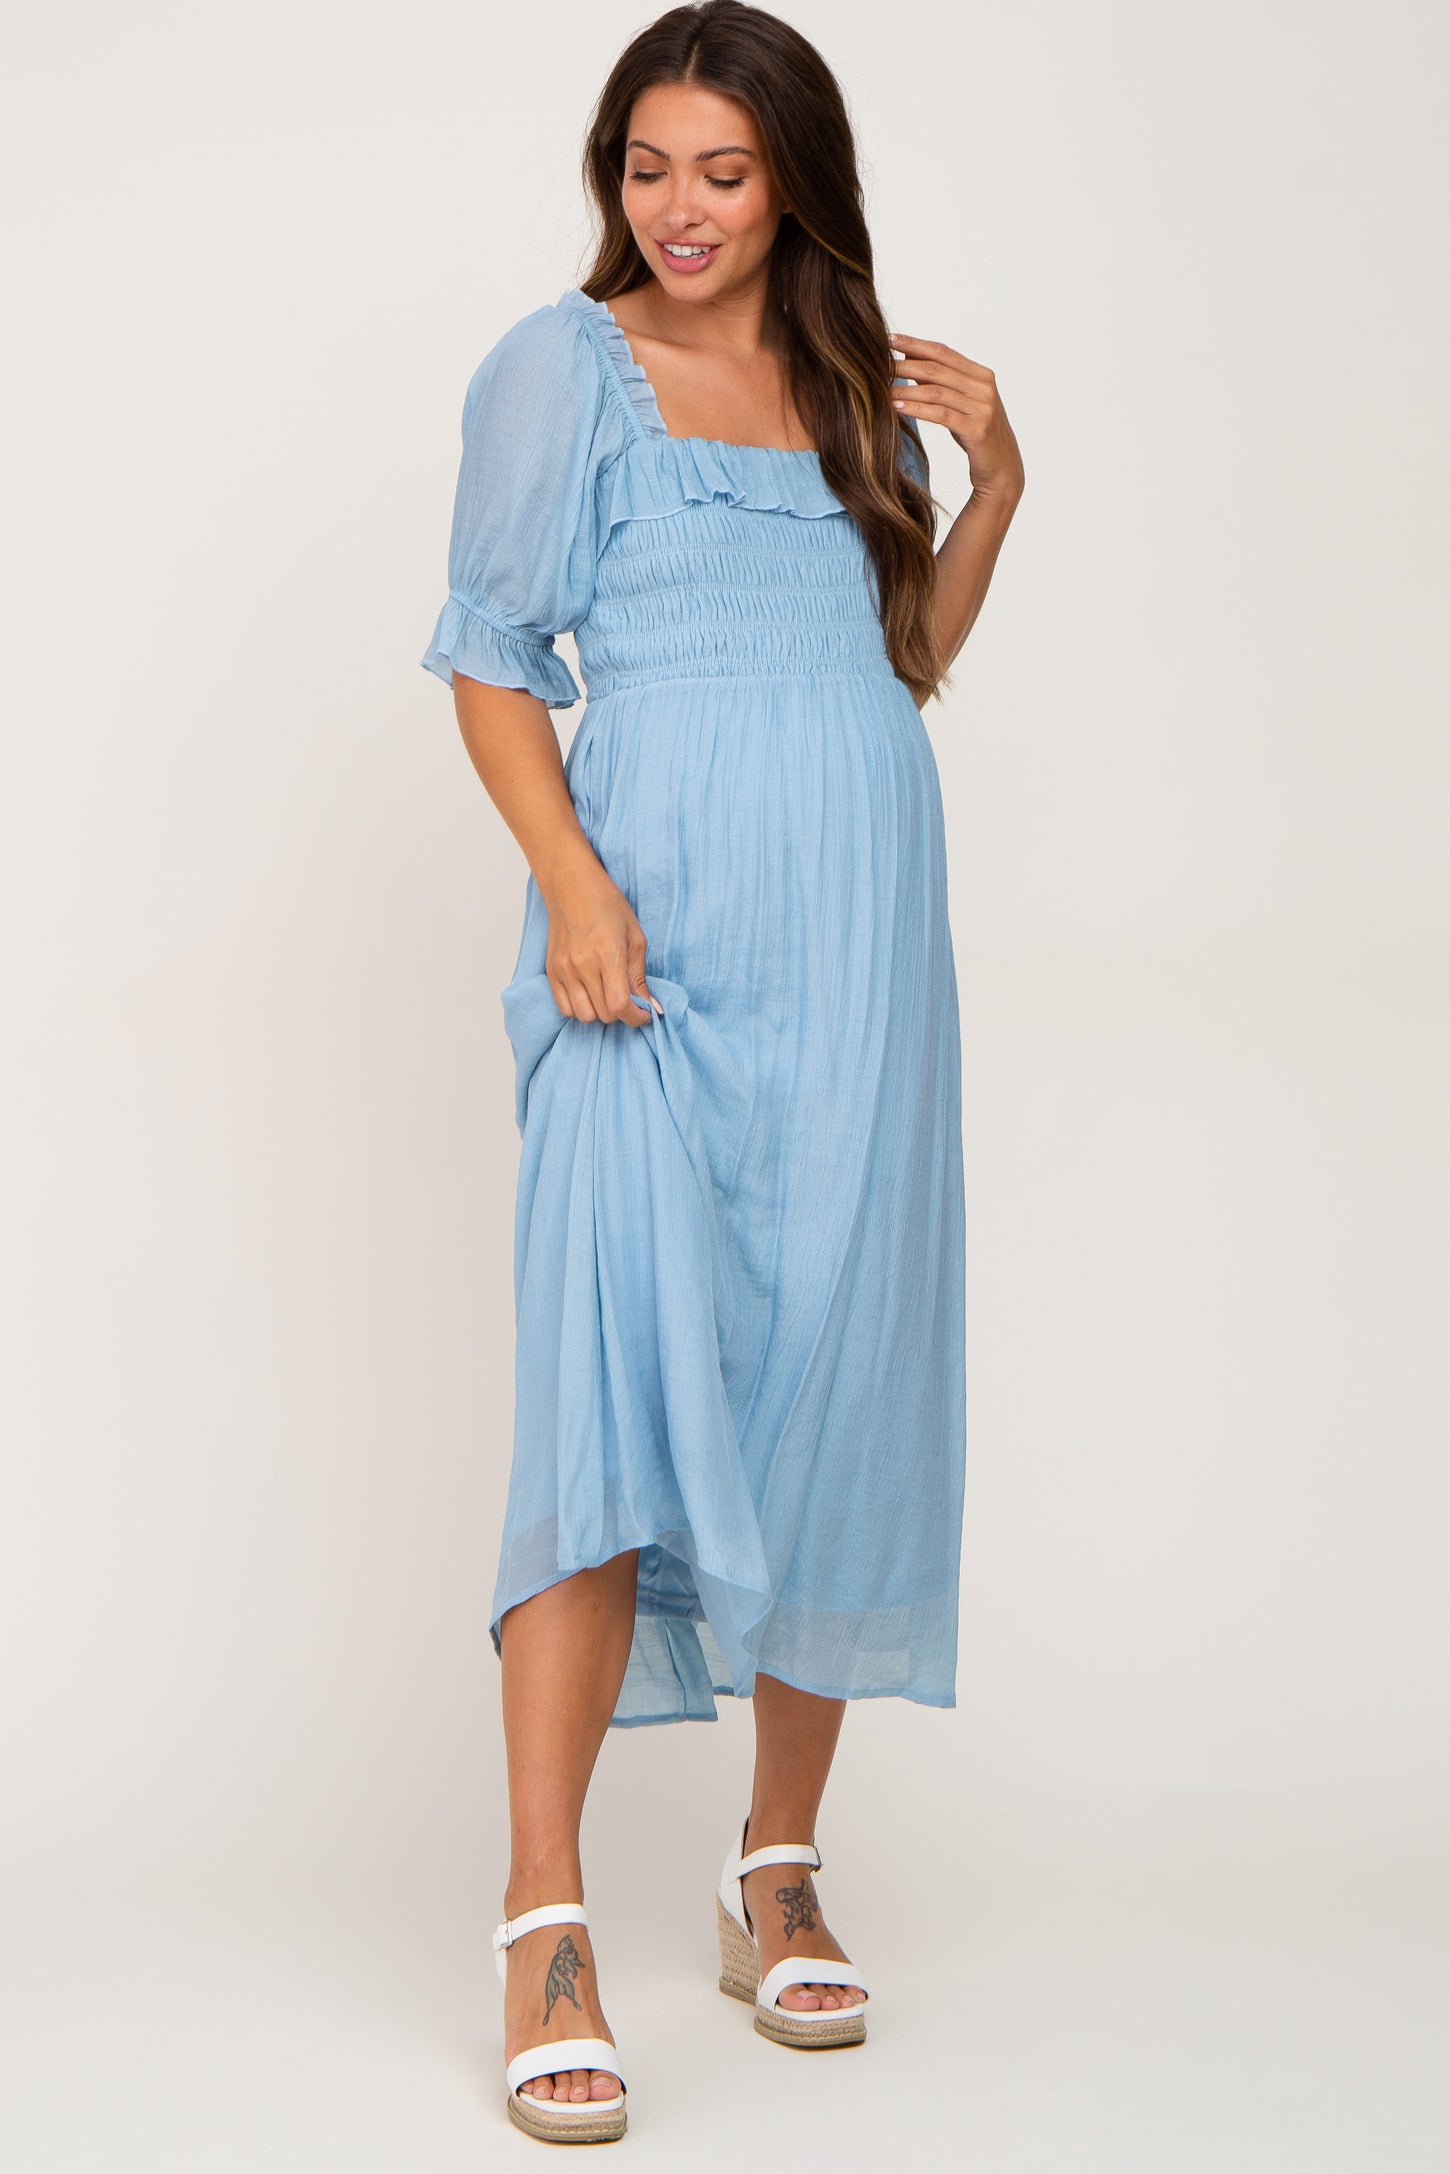 Light Blue Smocked Ruffle Accent Maternity Midi Dress